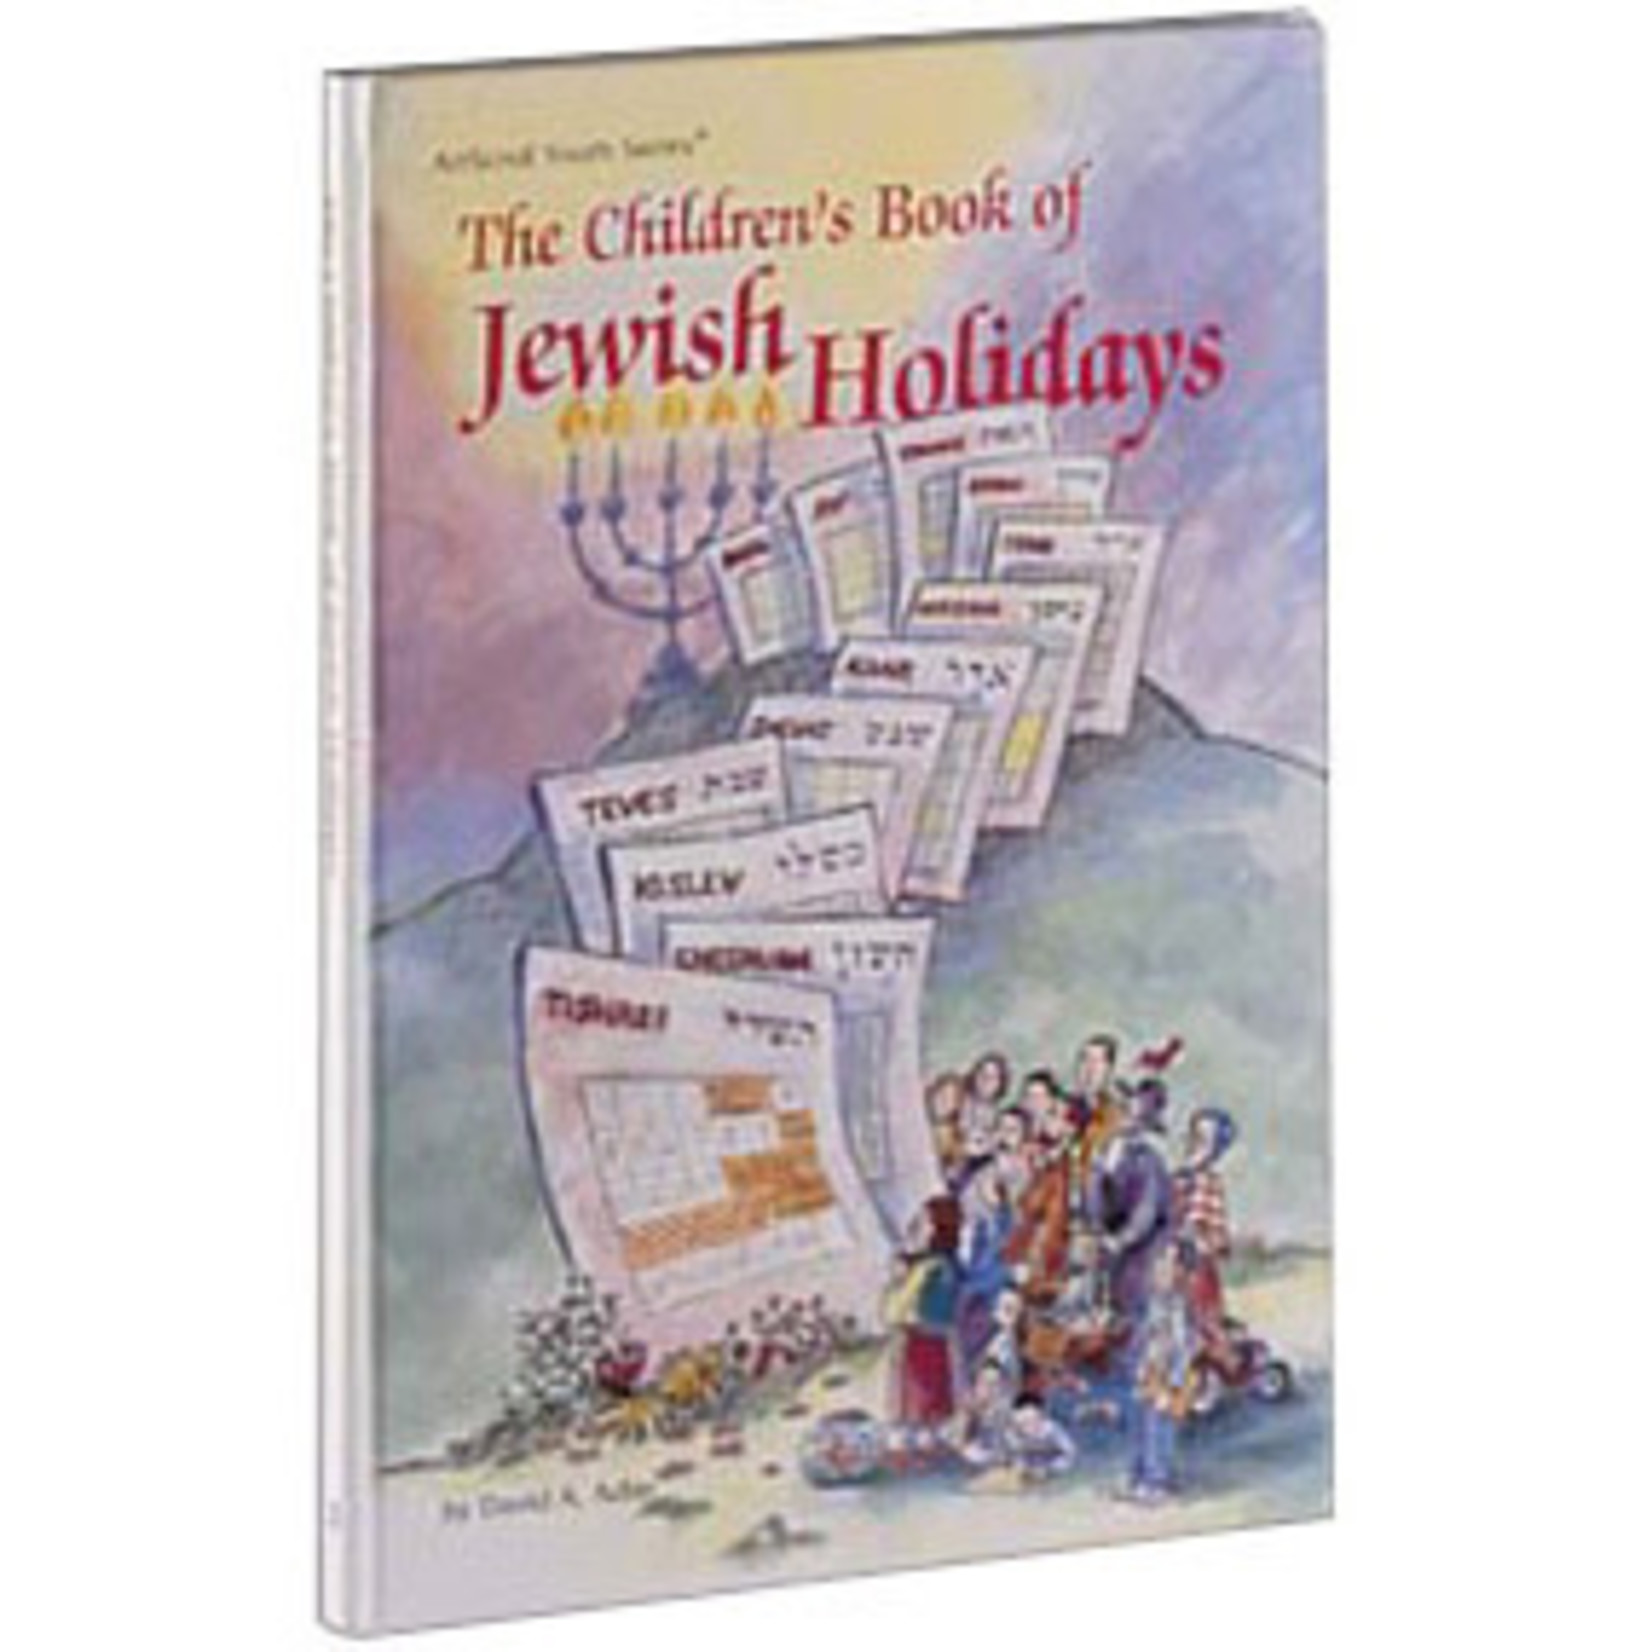 ArtScroll's Children's Book of Jewish Holidays